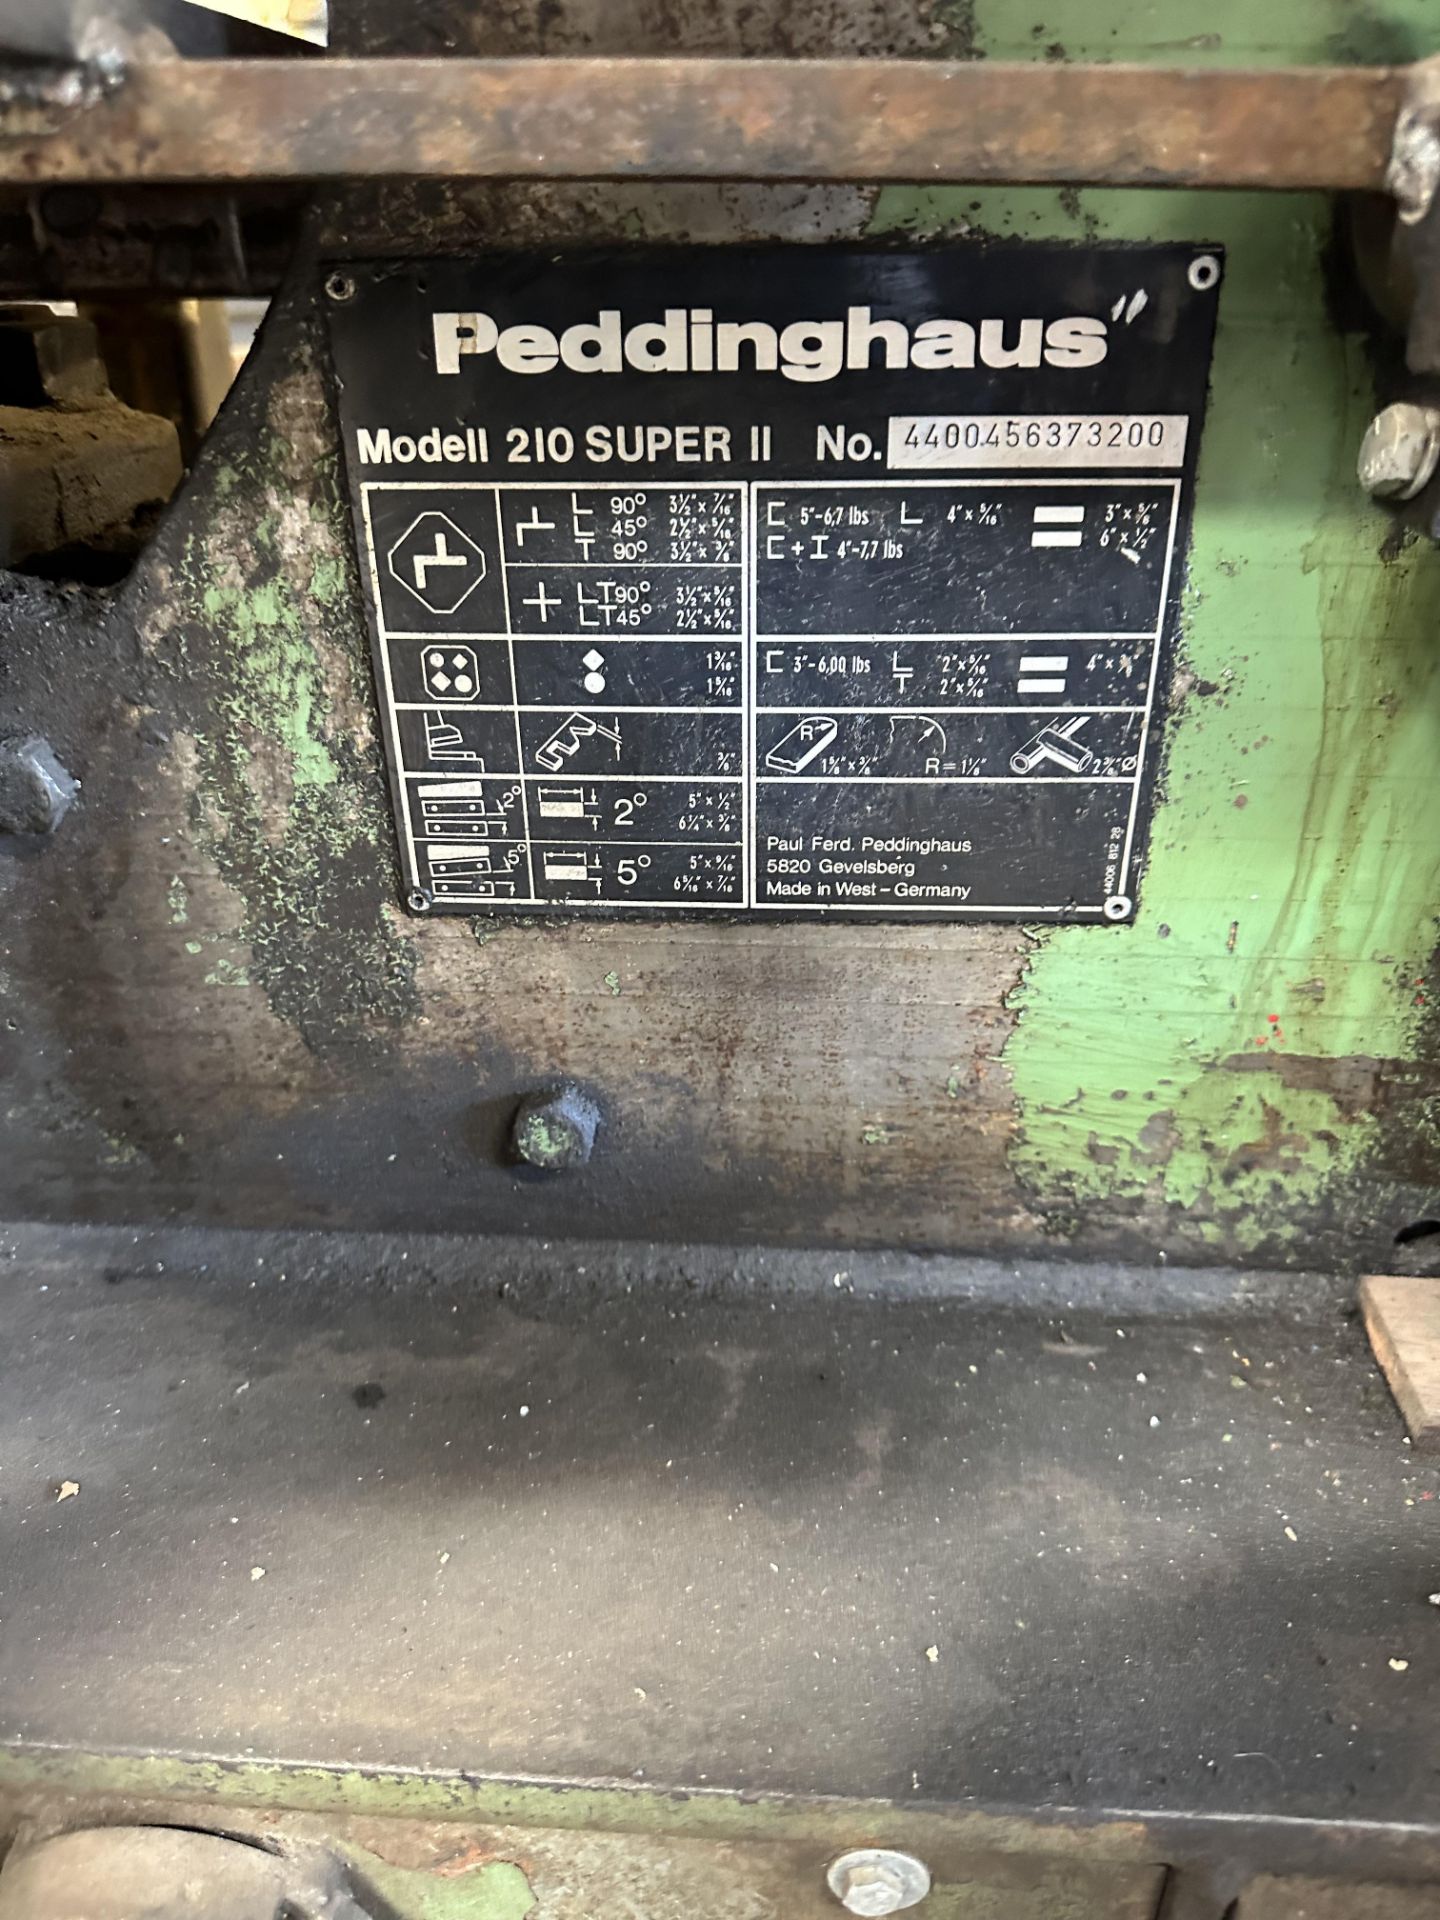 Peddinghaus Modell 210 Super ll iron worker sheer/Punch - Image 2 of 4